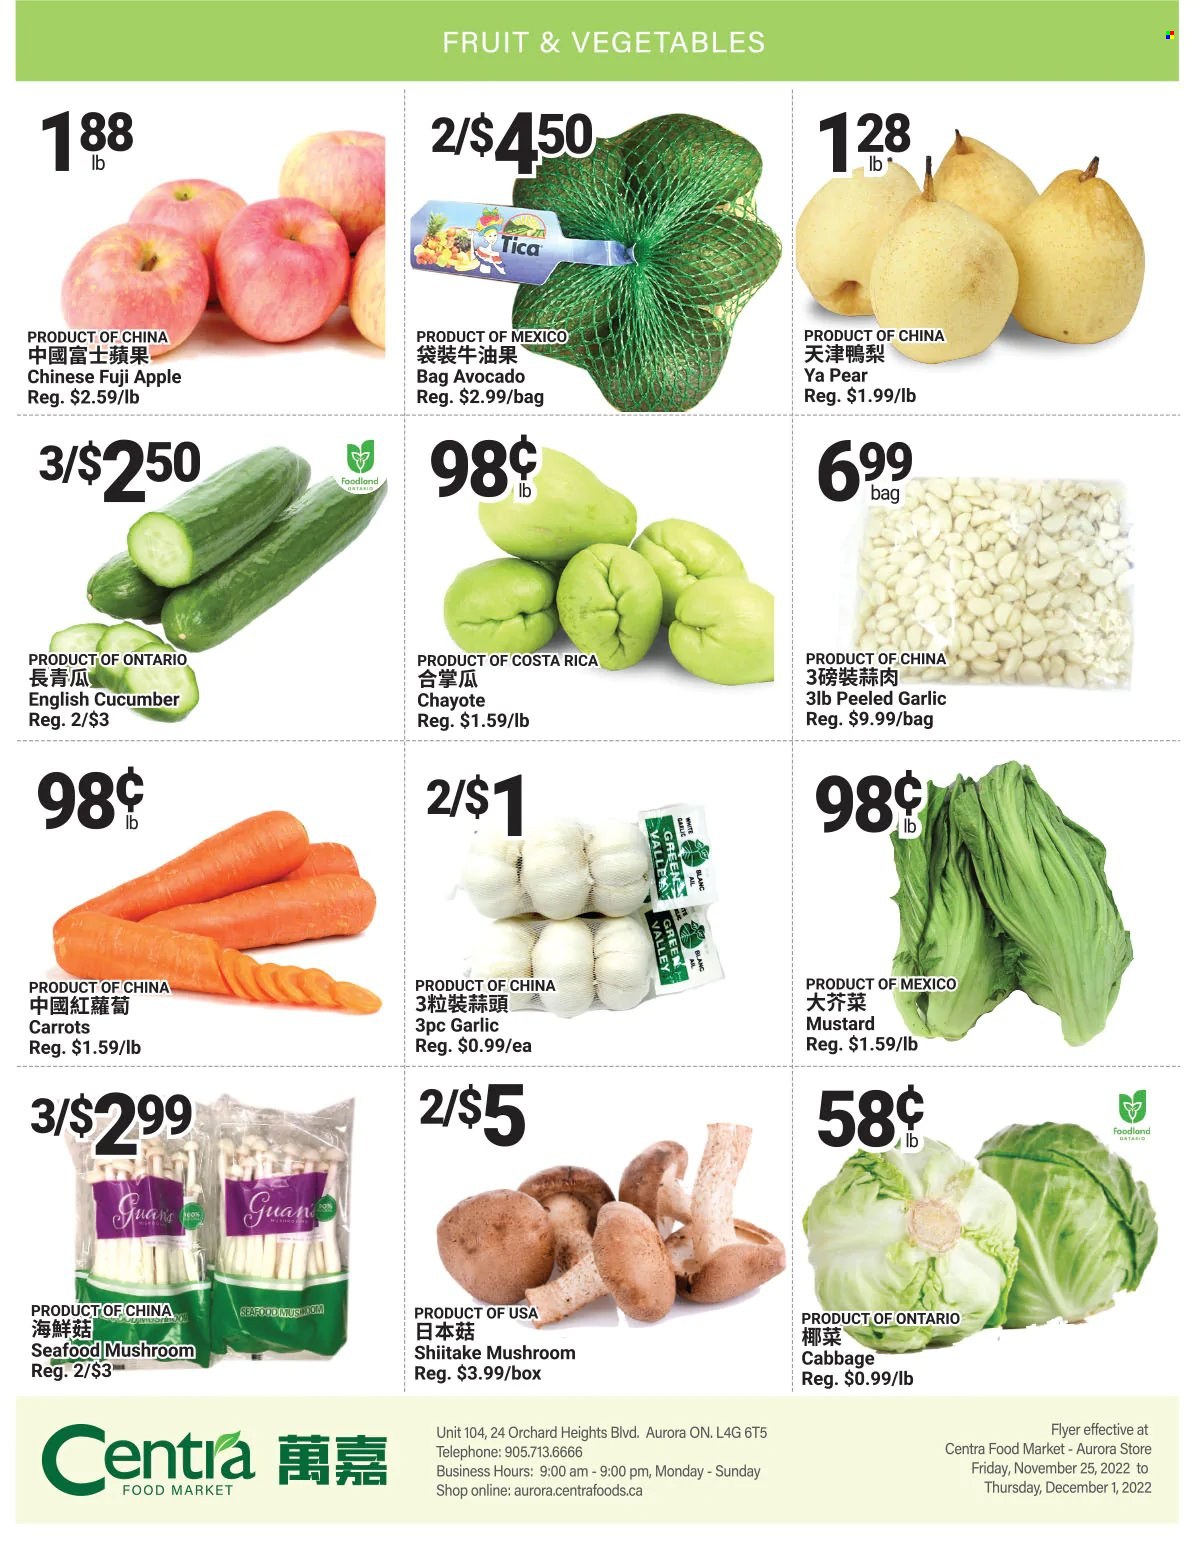 thumbnail - Centra Food Market Flyer - November 25, 2022 - December 01, 2022 - Sales products - mushrooms, cabbage, carrots, garlic, avocado, pears, Fuji apple, chayote, seafood, mustard. Page 2.